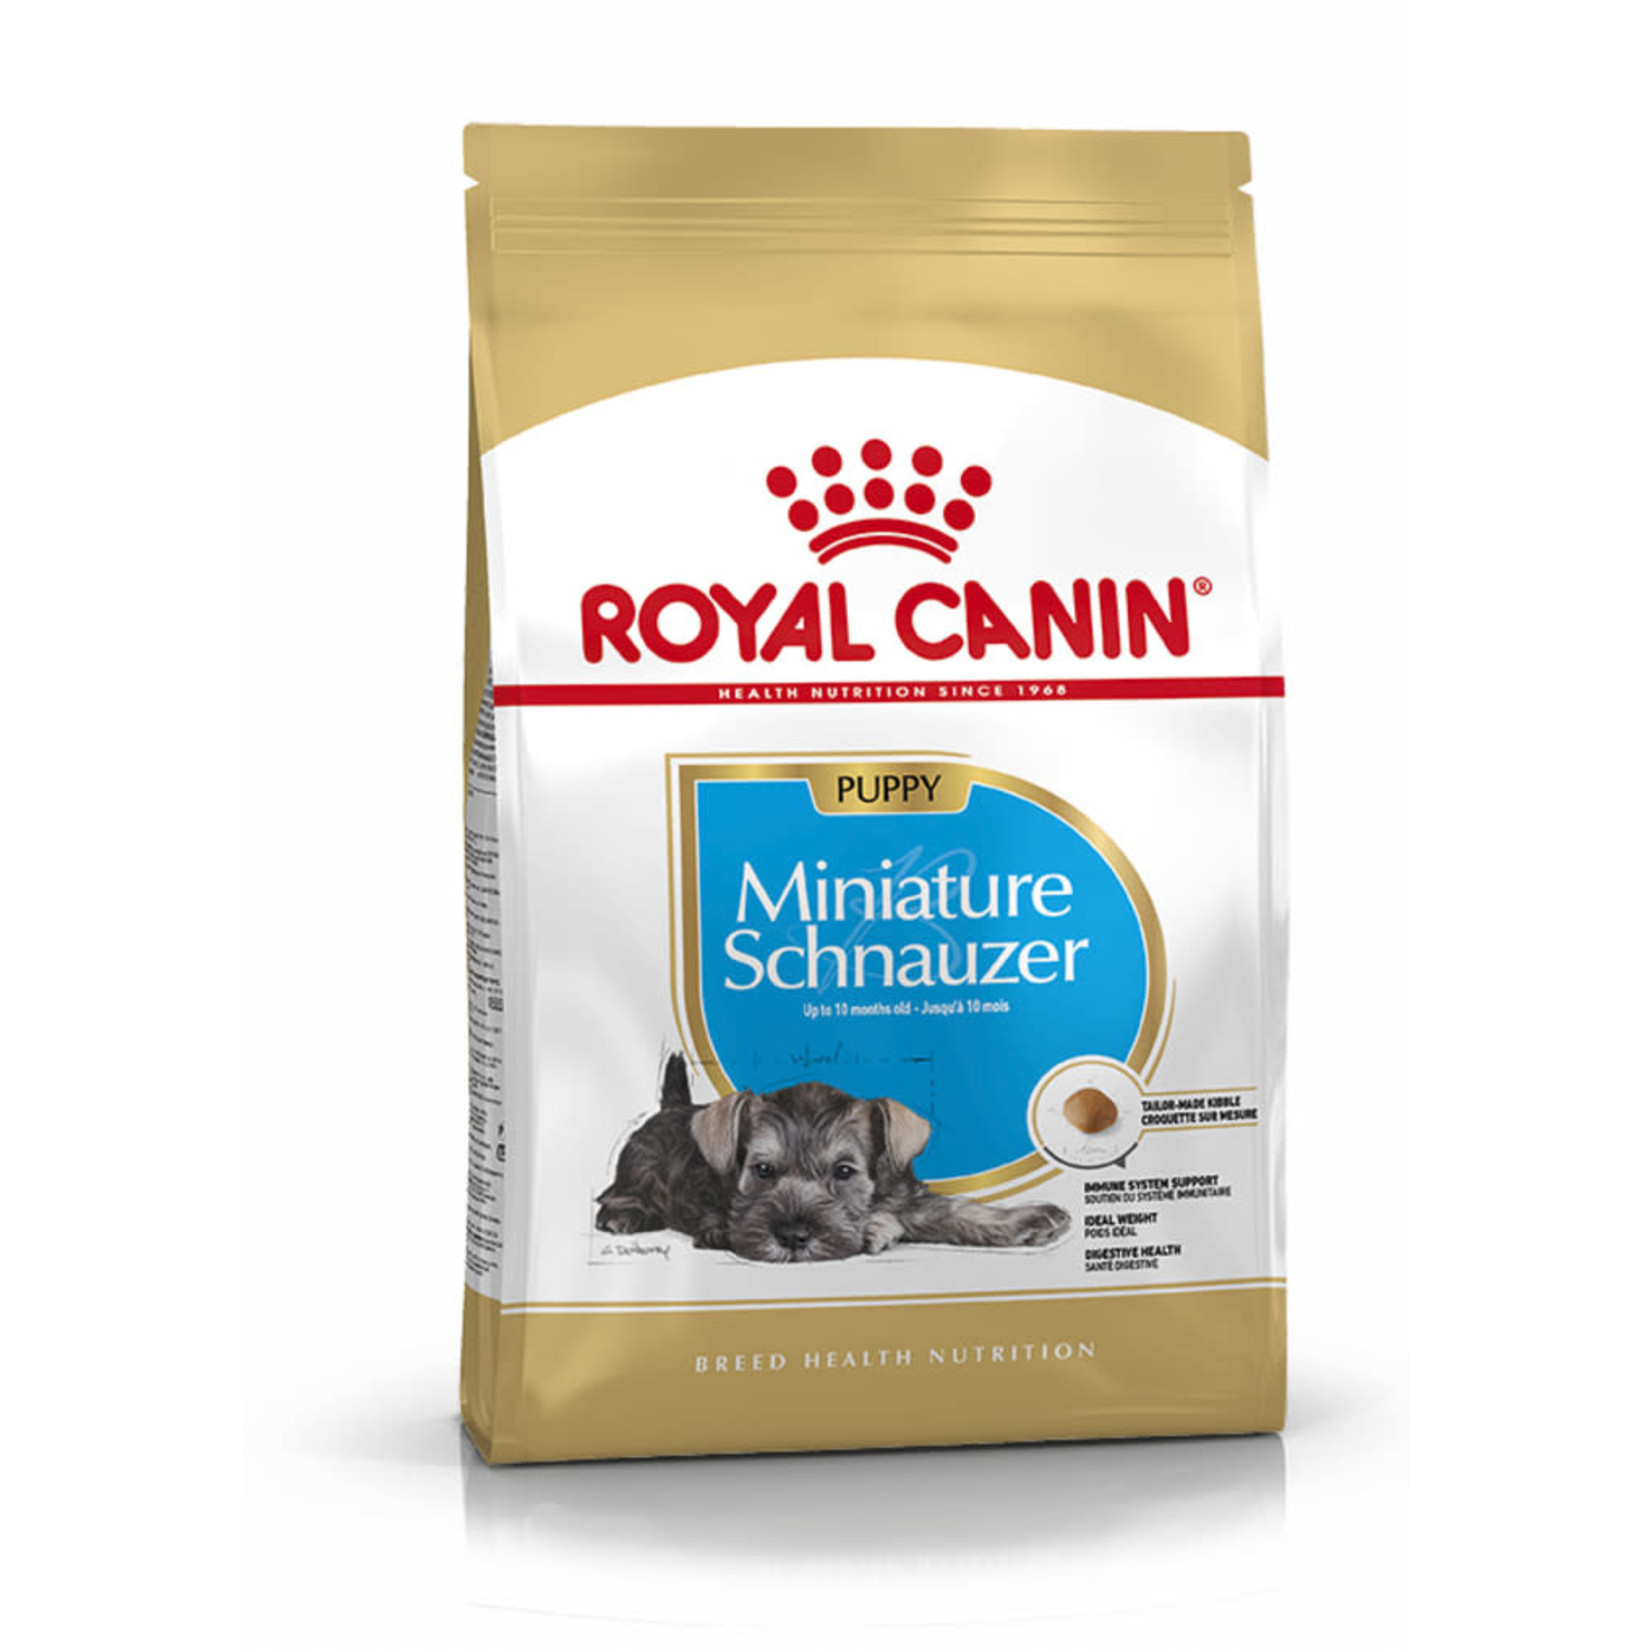 Royal Canin Miniature Schnauzer Puppy Dry Food, 1.5kg